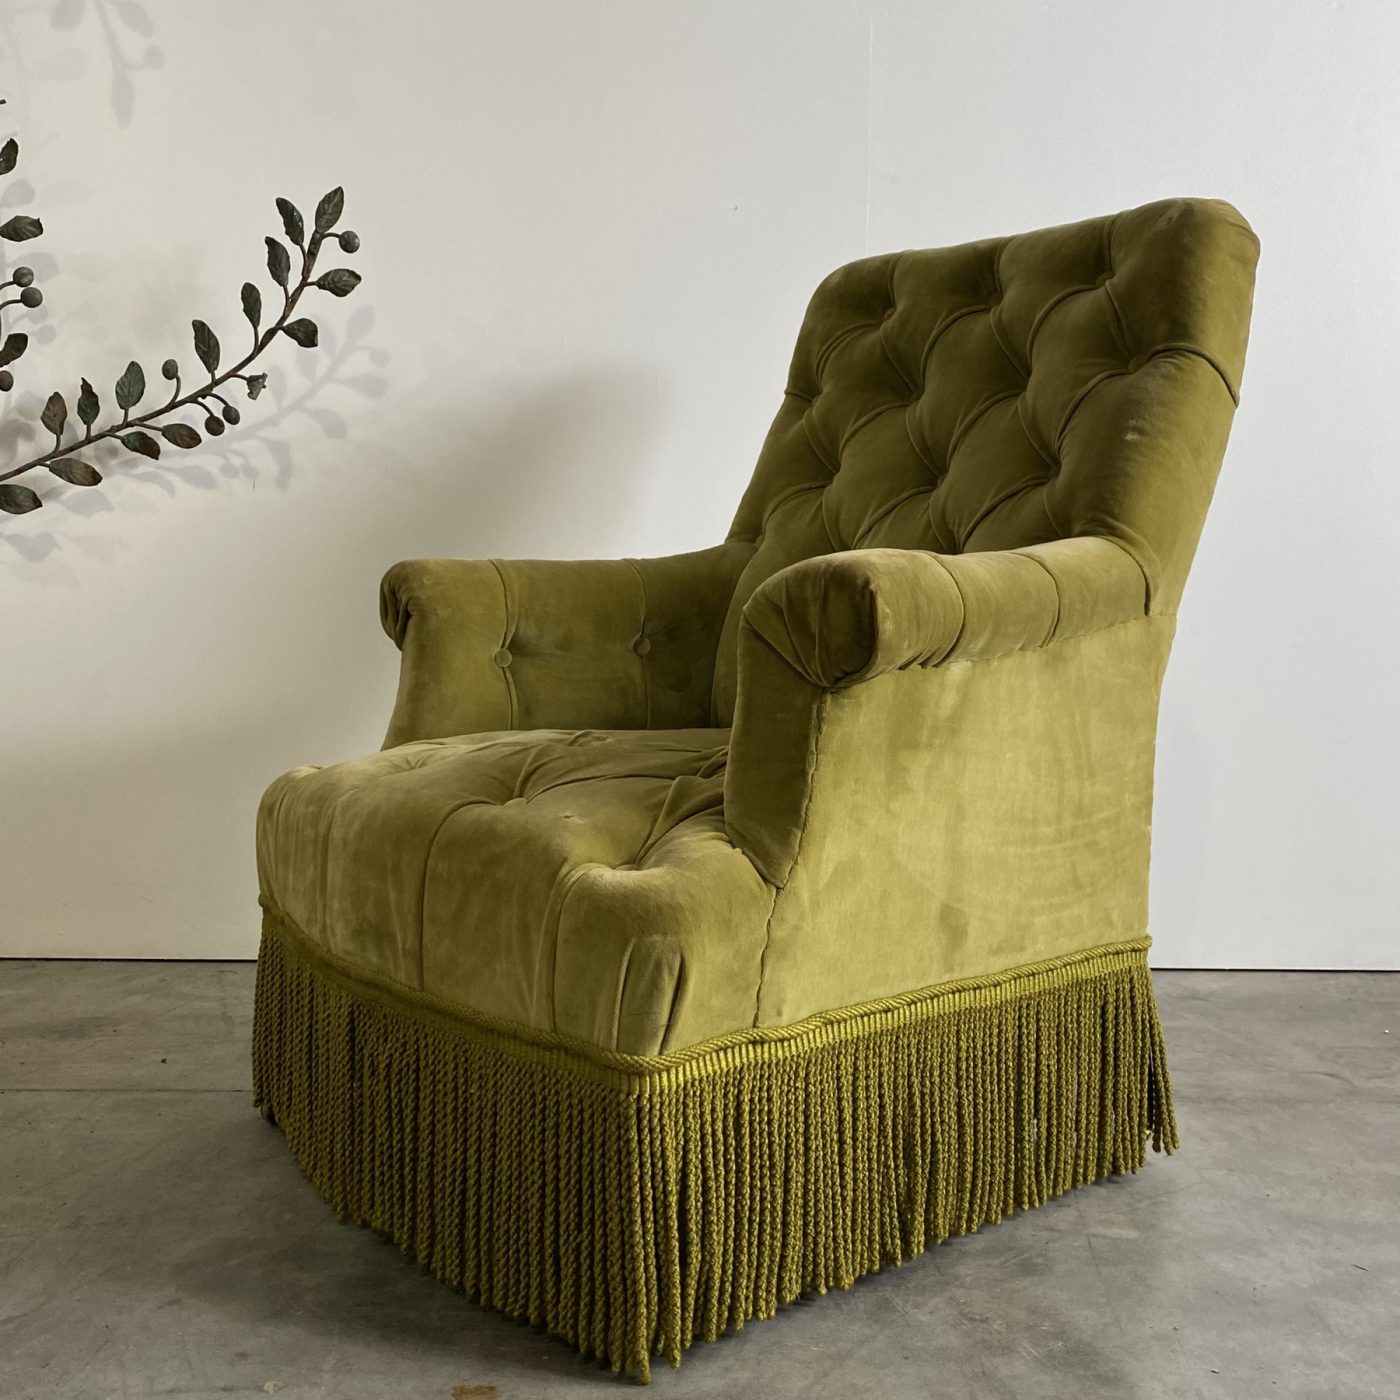 objet-vagabond-napoleon3-chairs0005